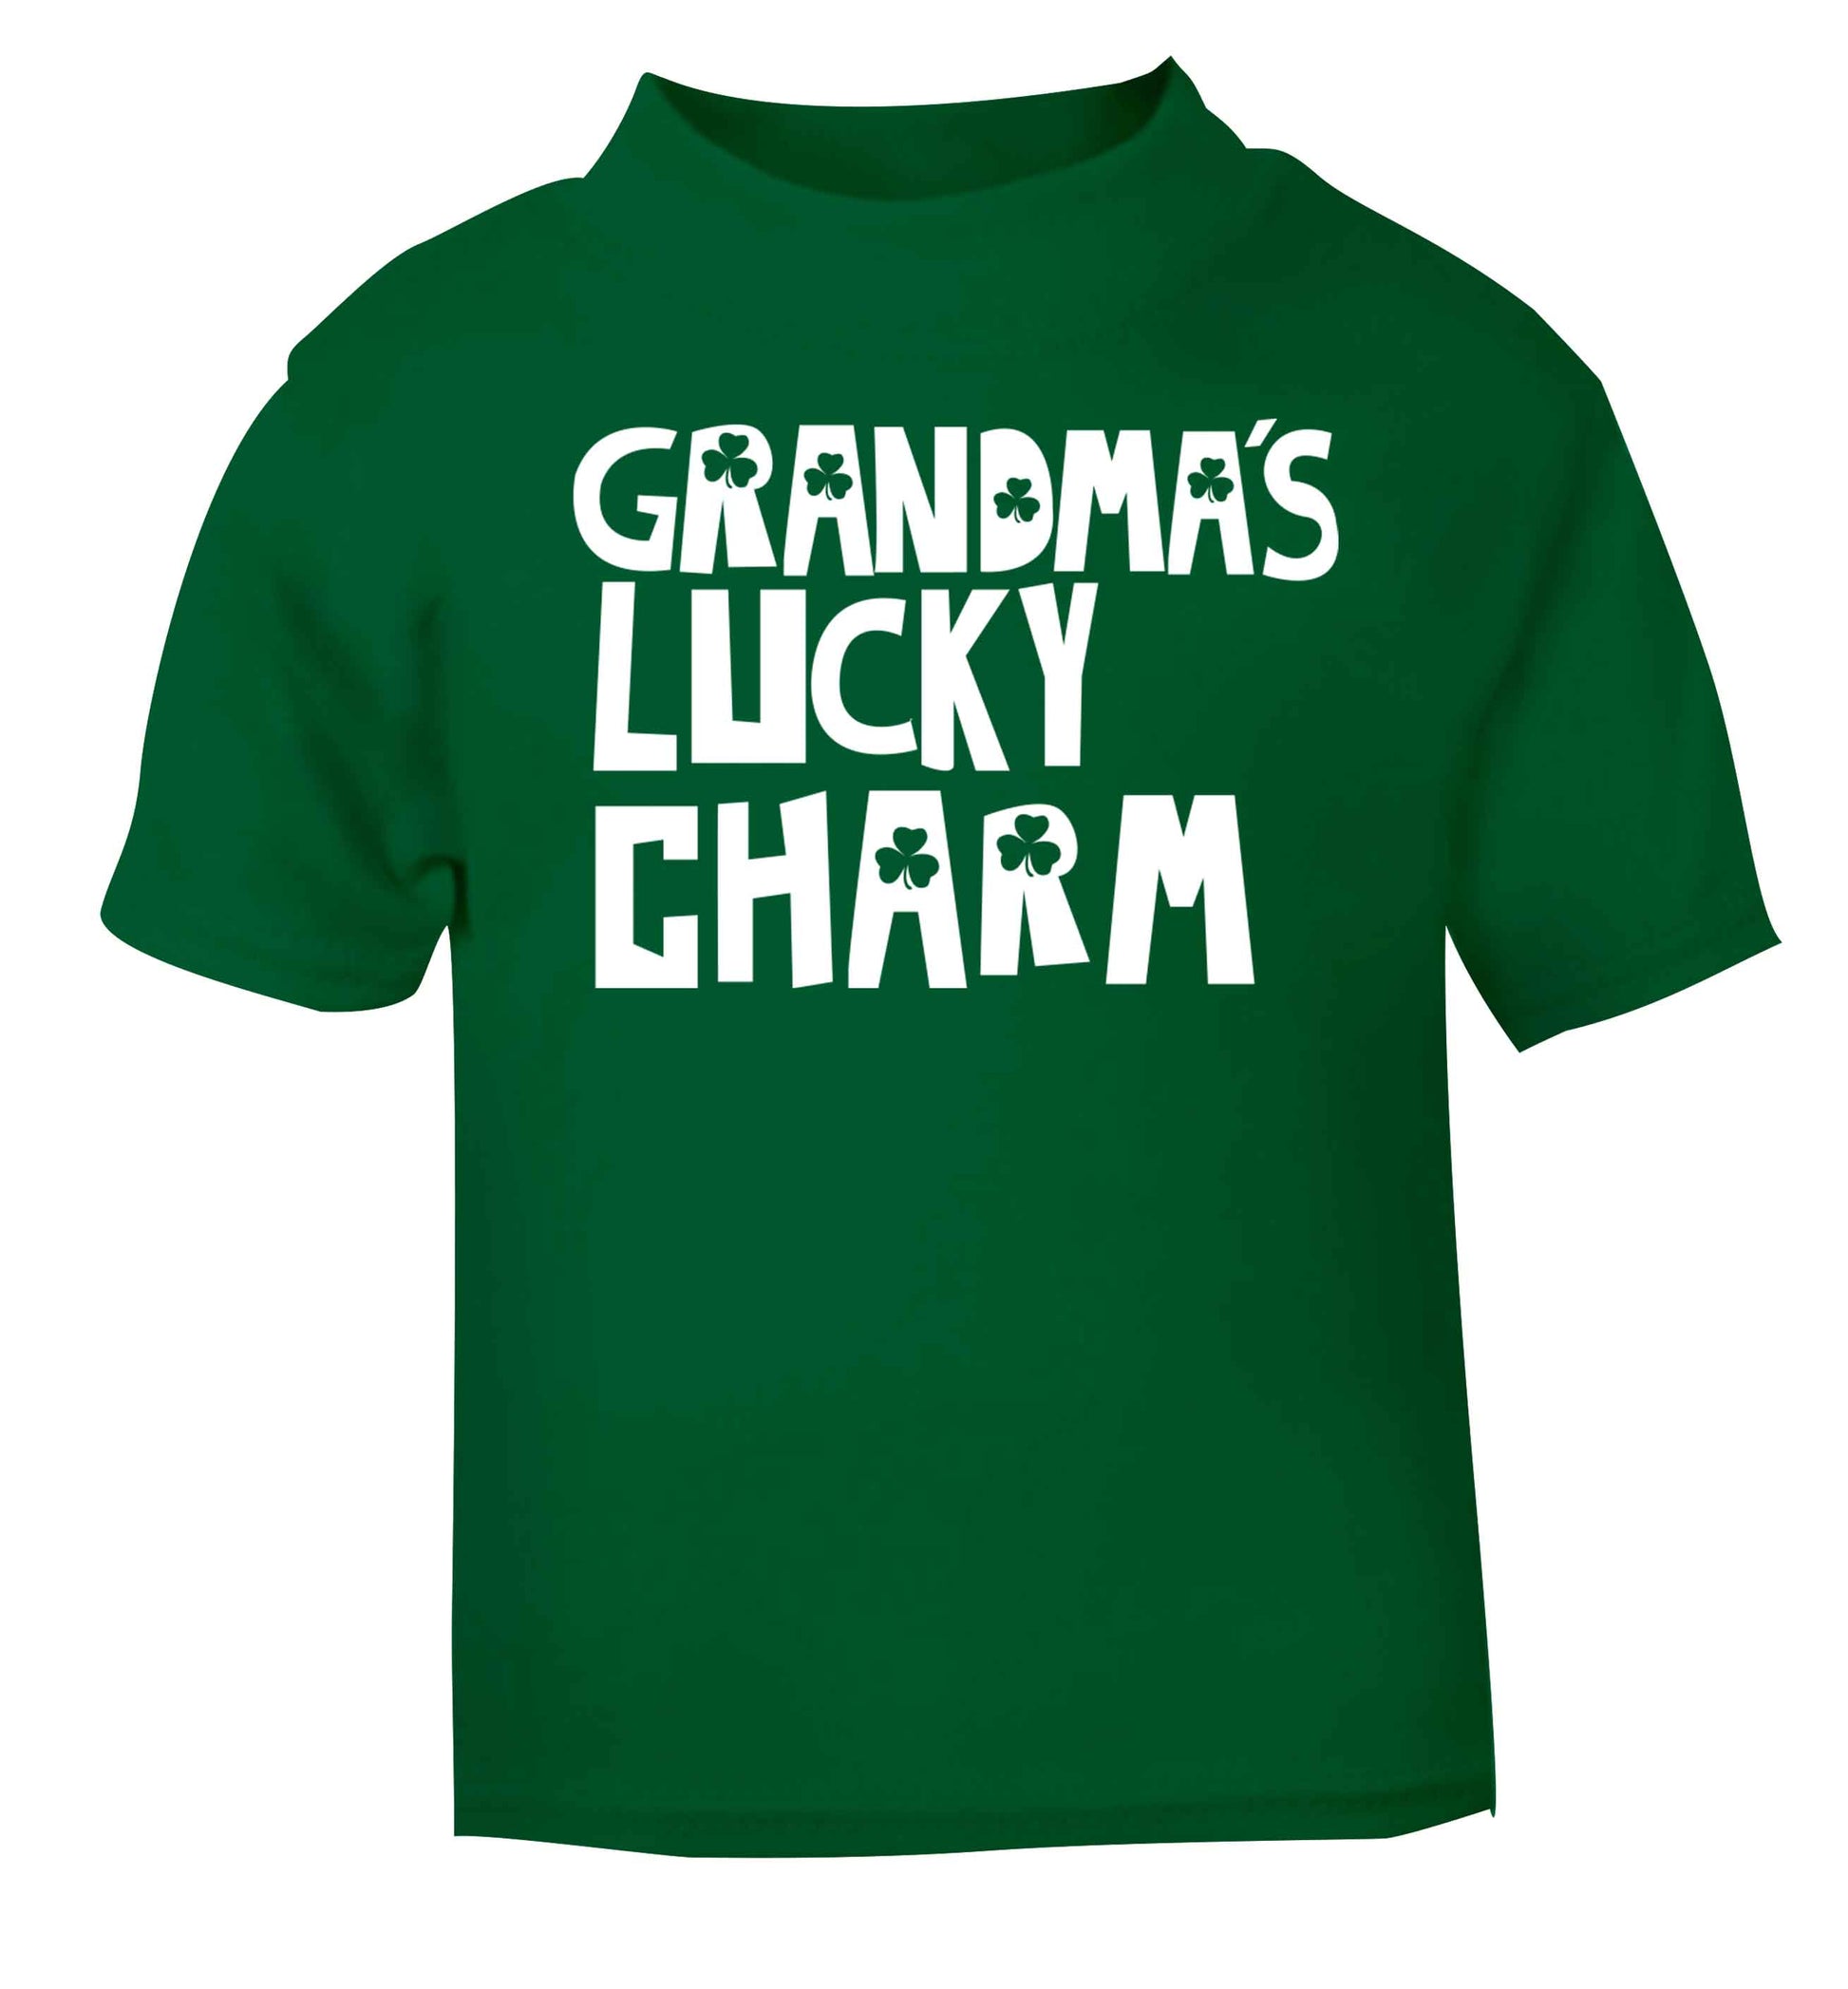 Grandma's lucky charm green baby toddler Tshirt 2 Years